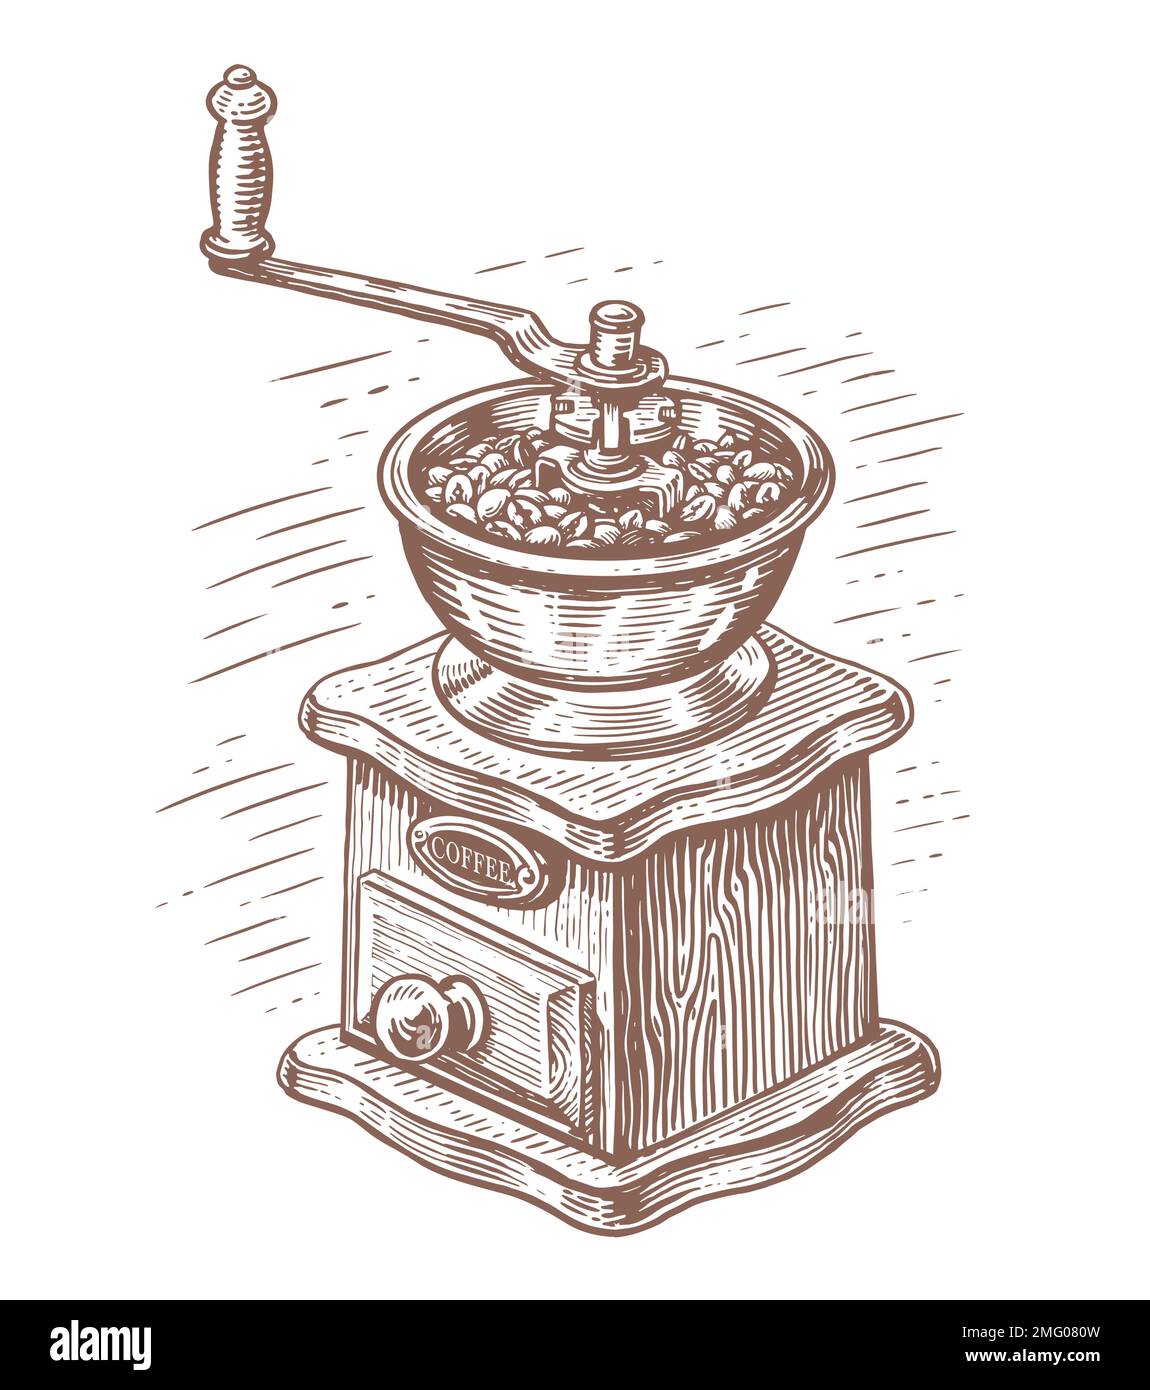 Molinillo de café manual, molinillo de grano de café retro italiano con  mango grueso, máquina de molienda de café de mano marrón, molinillo de café